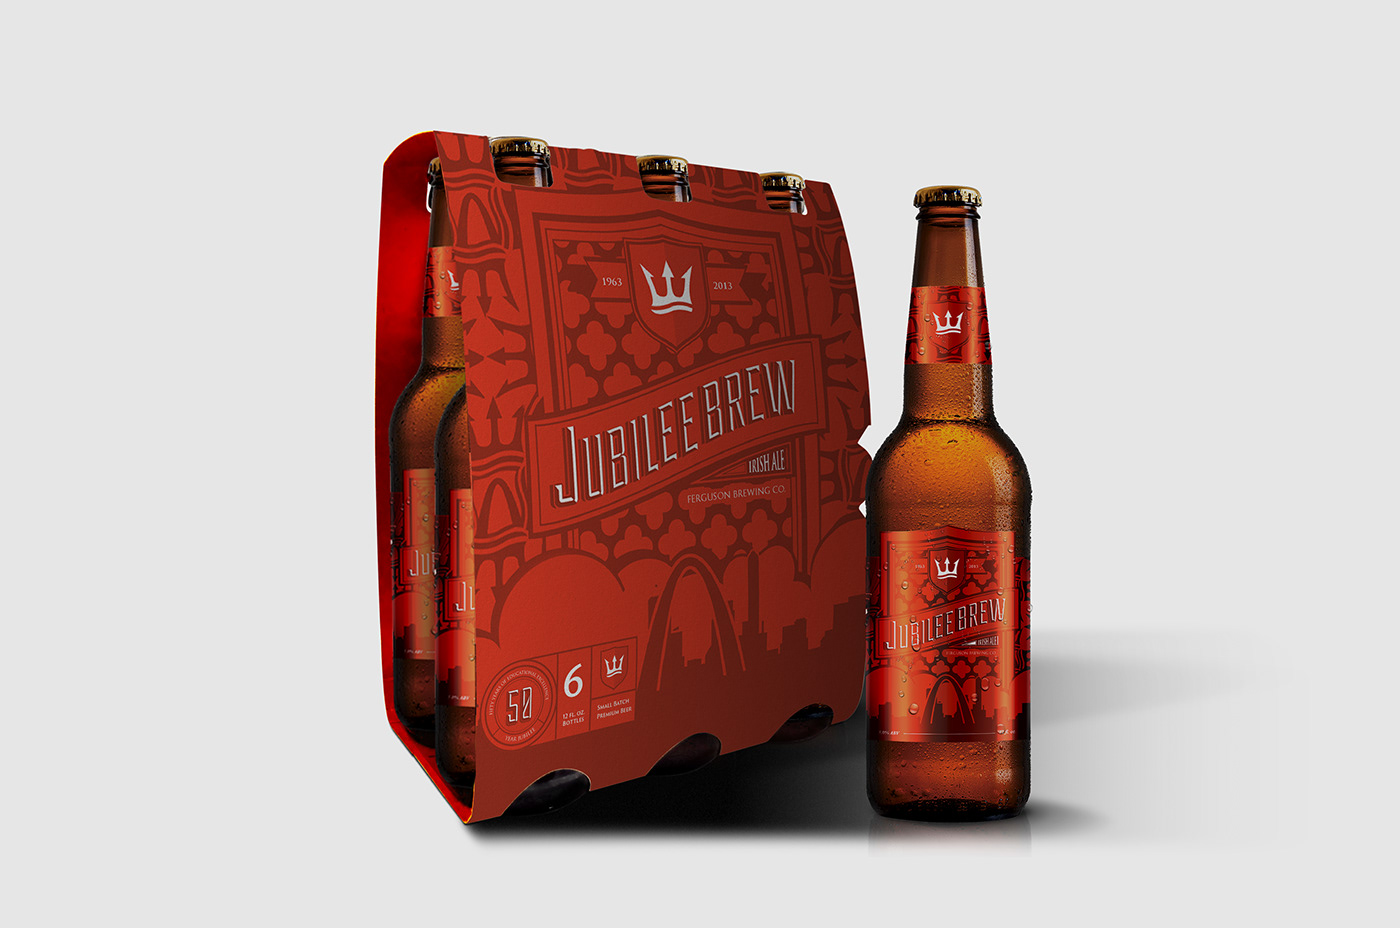 beer saint louis jubilee ferguson Label package case pattern red anniversary University